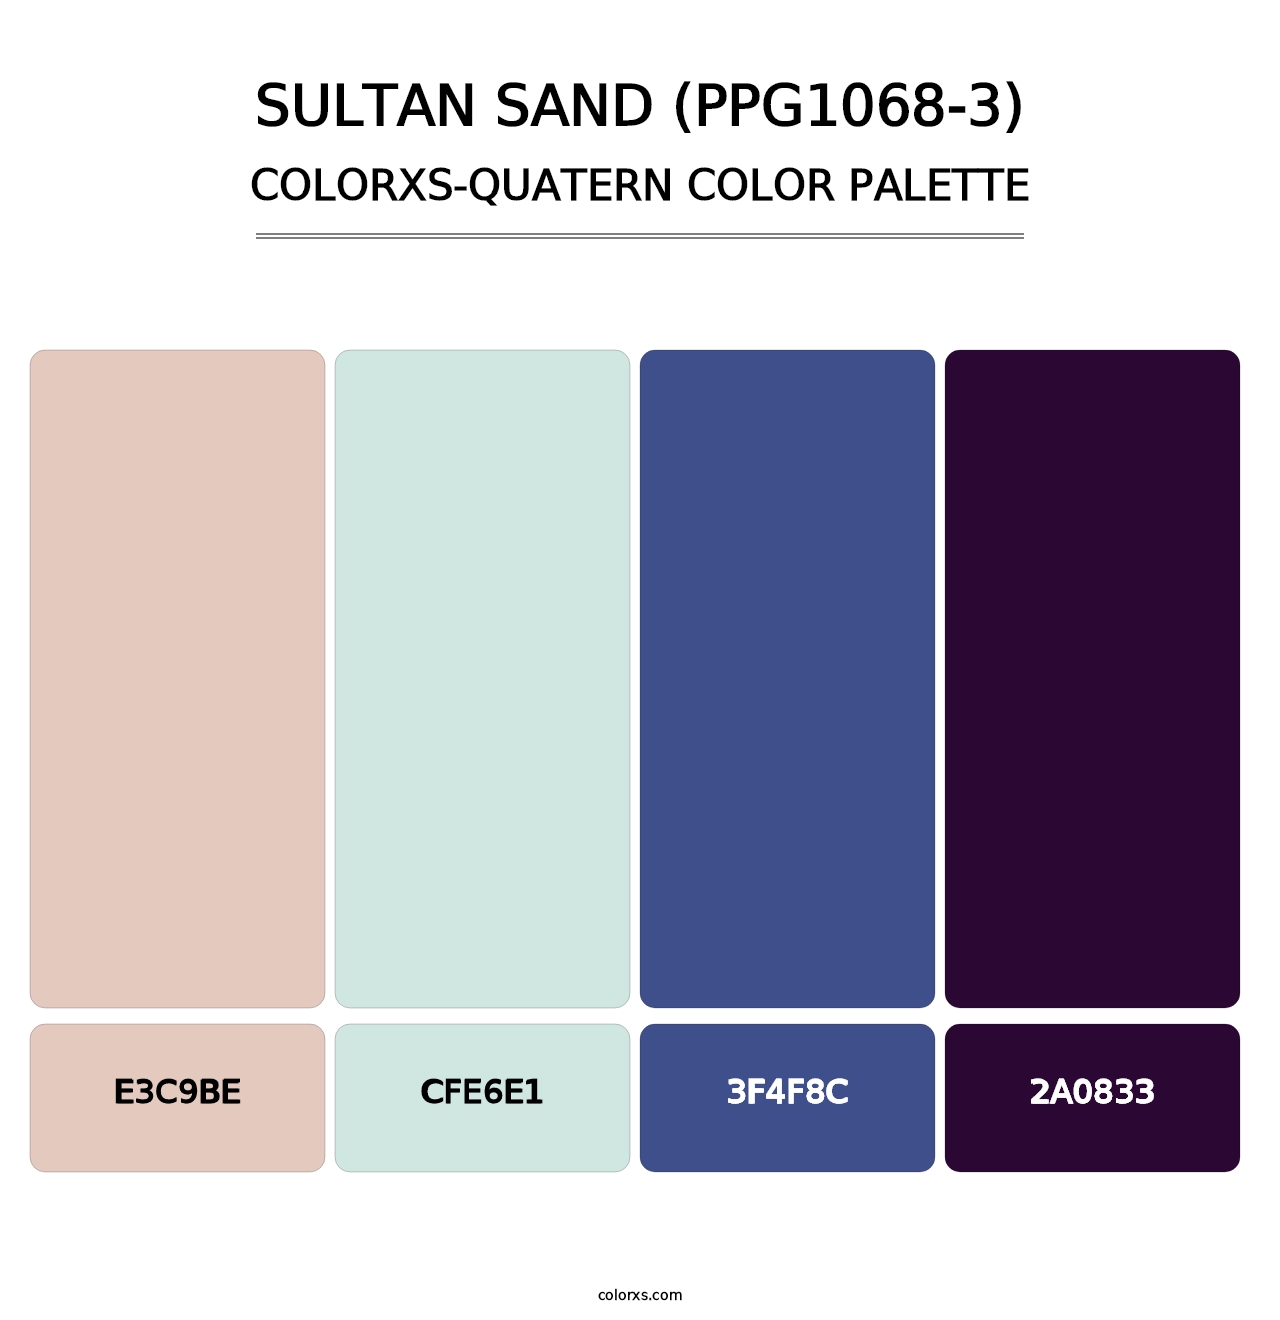 Sultan Sand (PPG1068-3) - Colorxs Quatern Palette